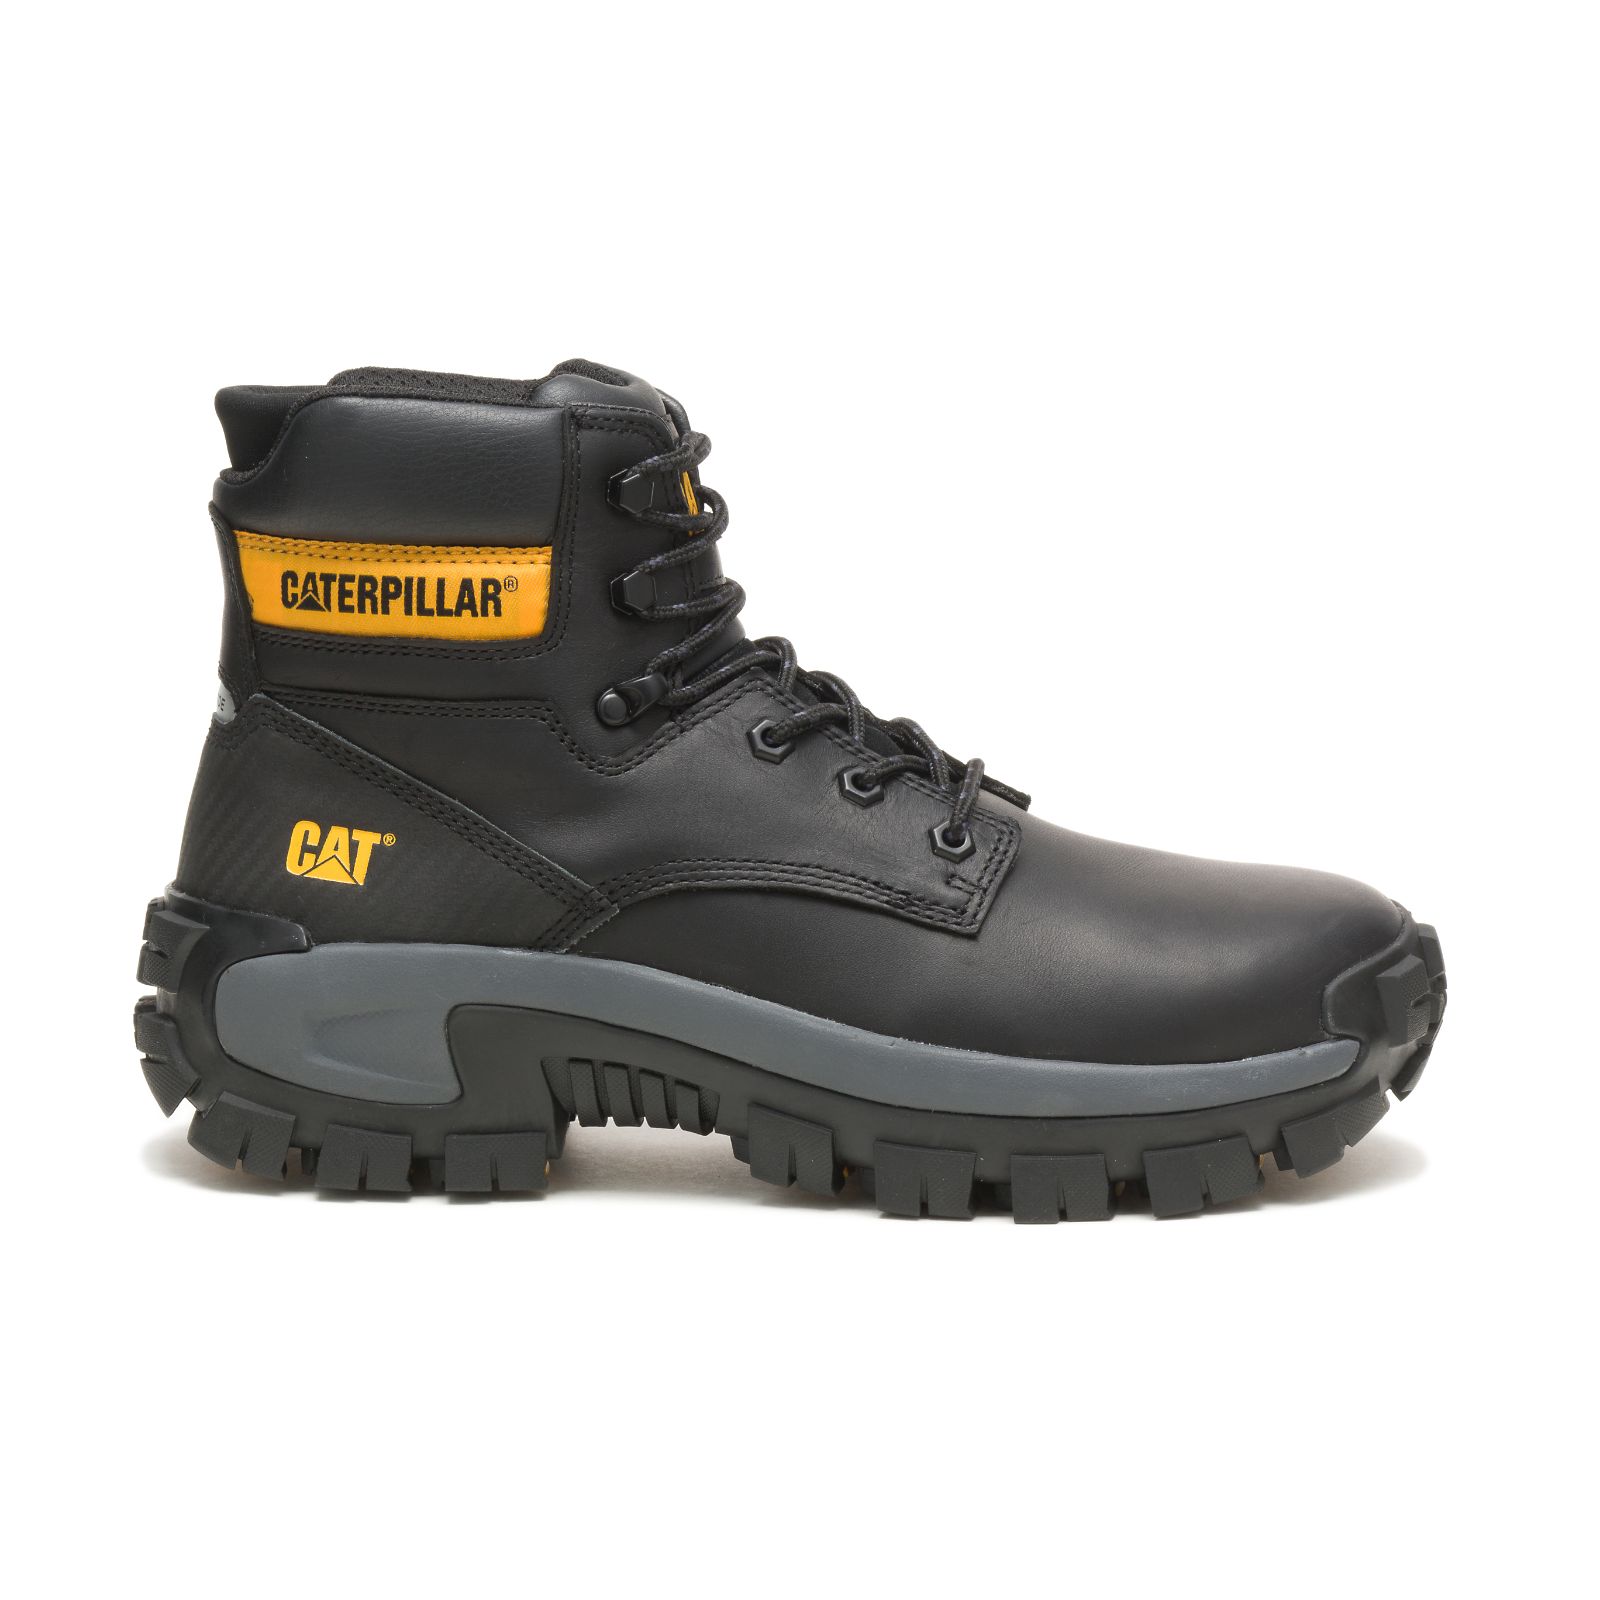 Caterpillar Steel Toe Boots UAE - Caterpillar Invader Hi Steel Toe Mens - Black AOYMIZ746